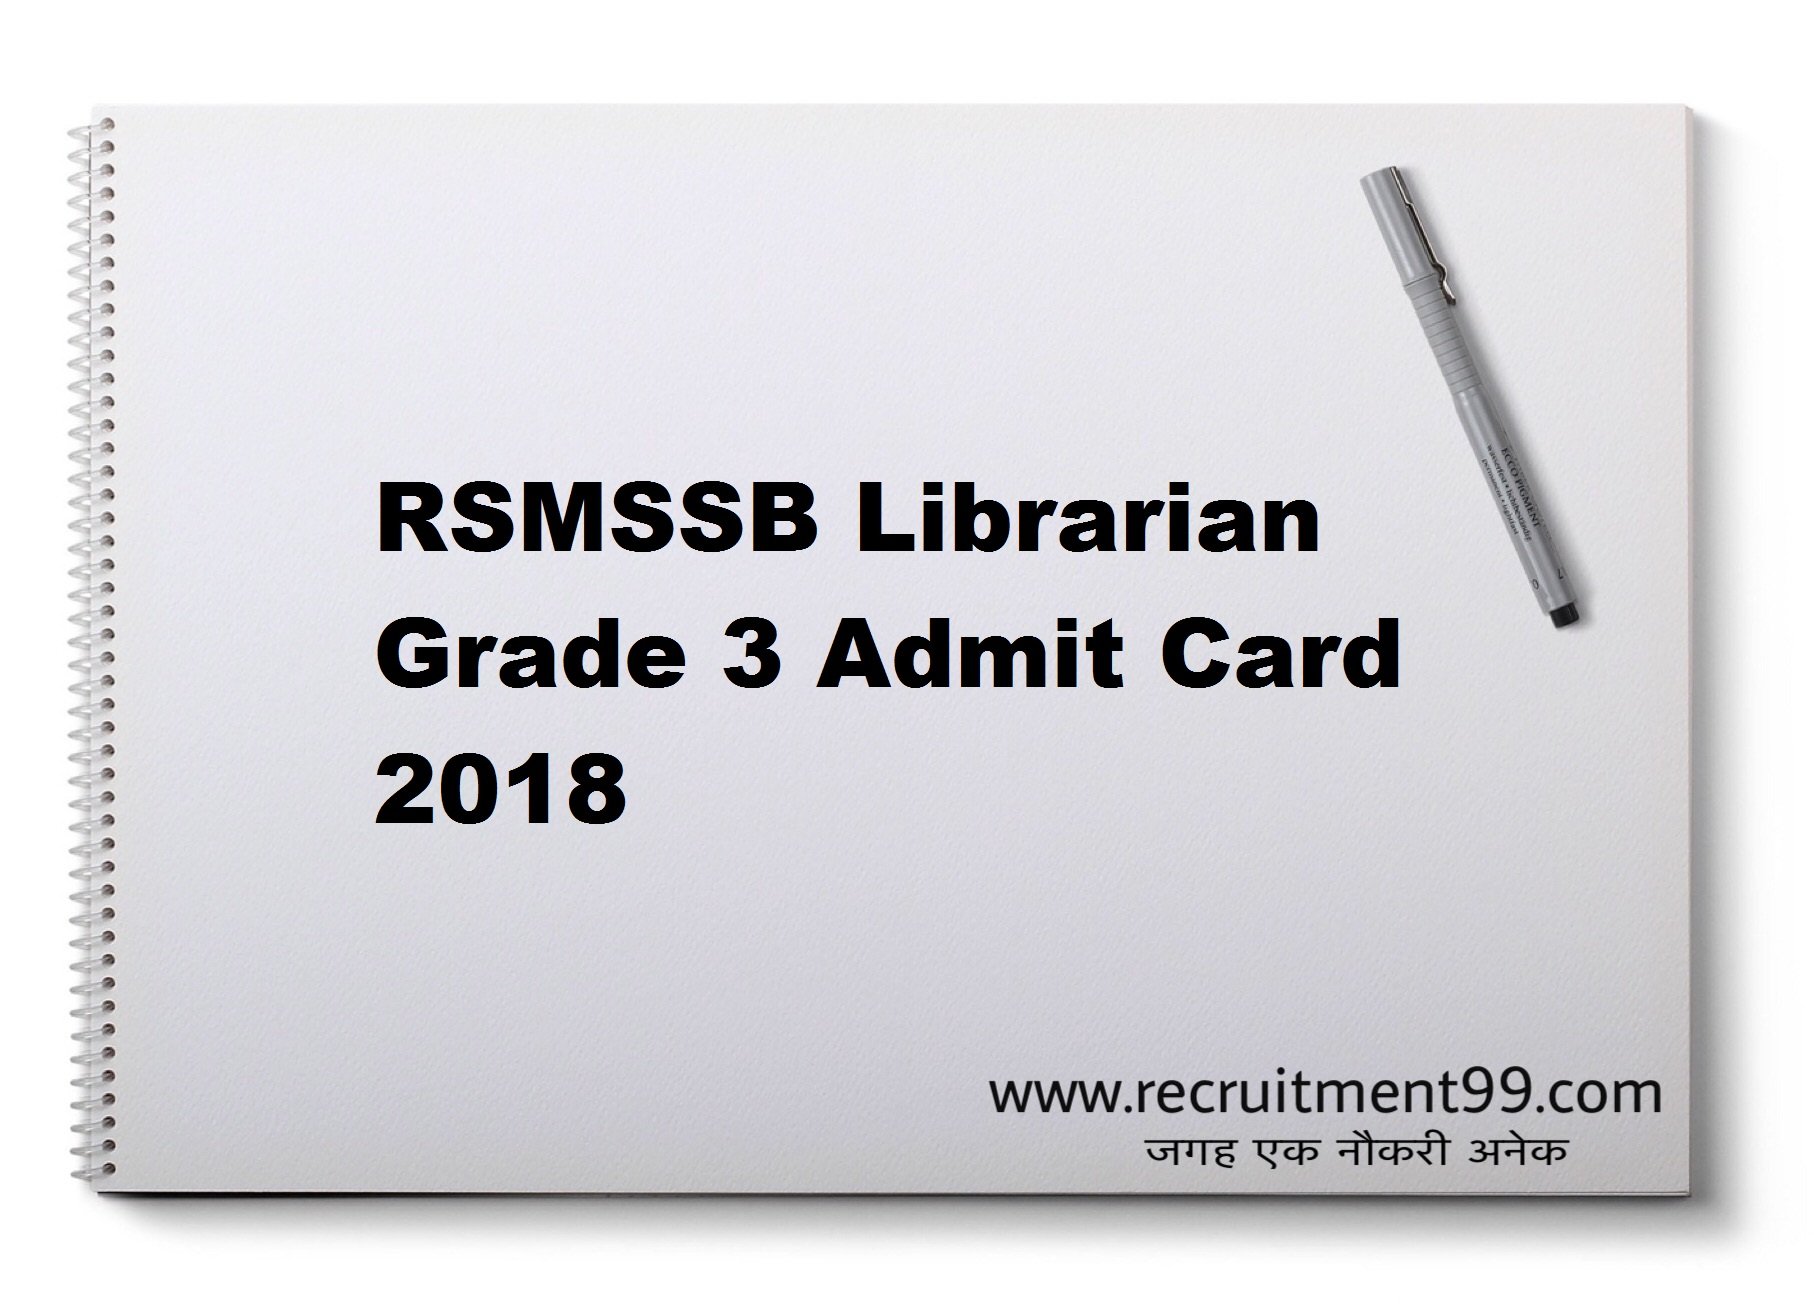 RSMSSB Librarian Grade 3 Admit Card 2018